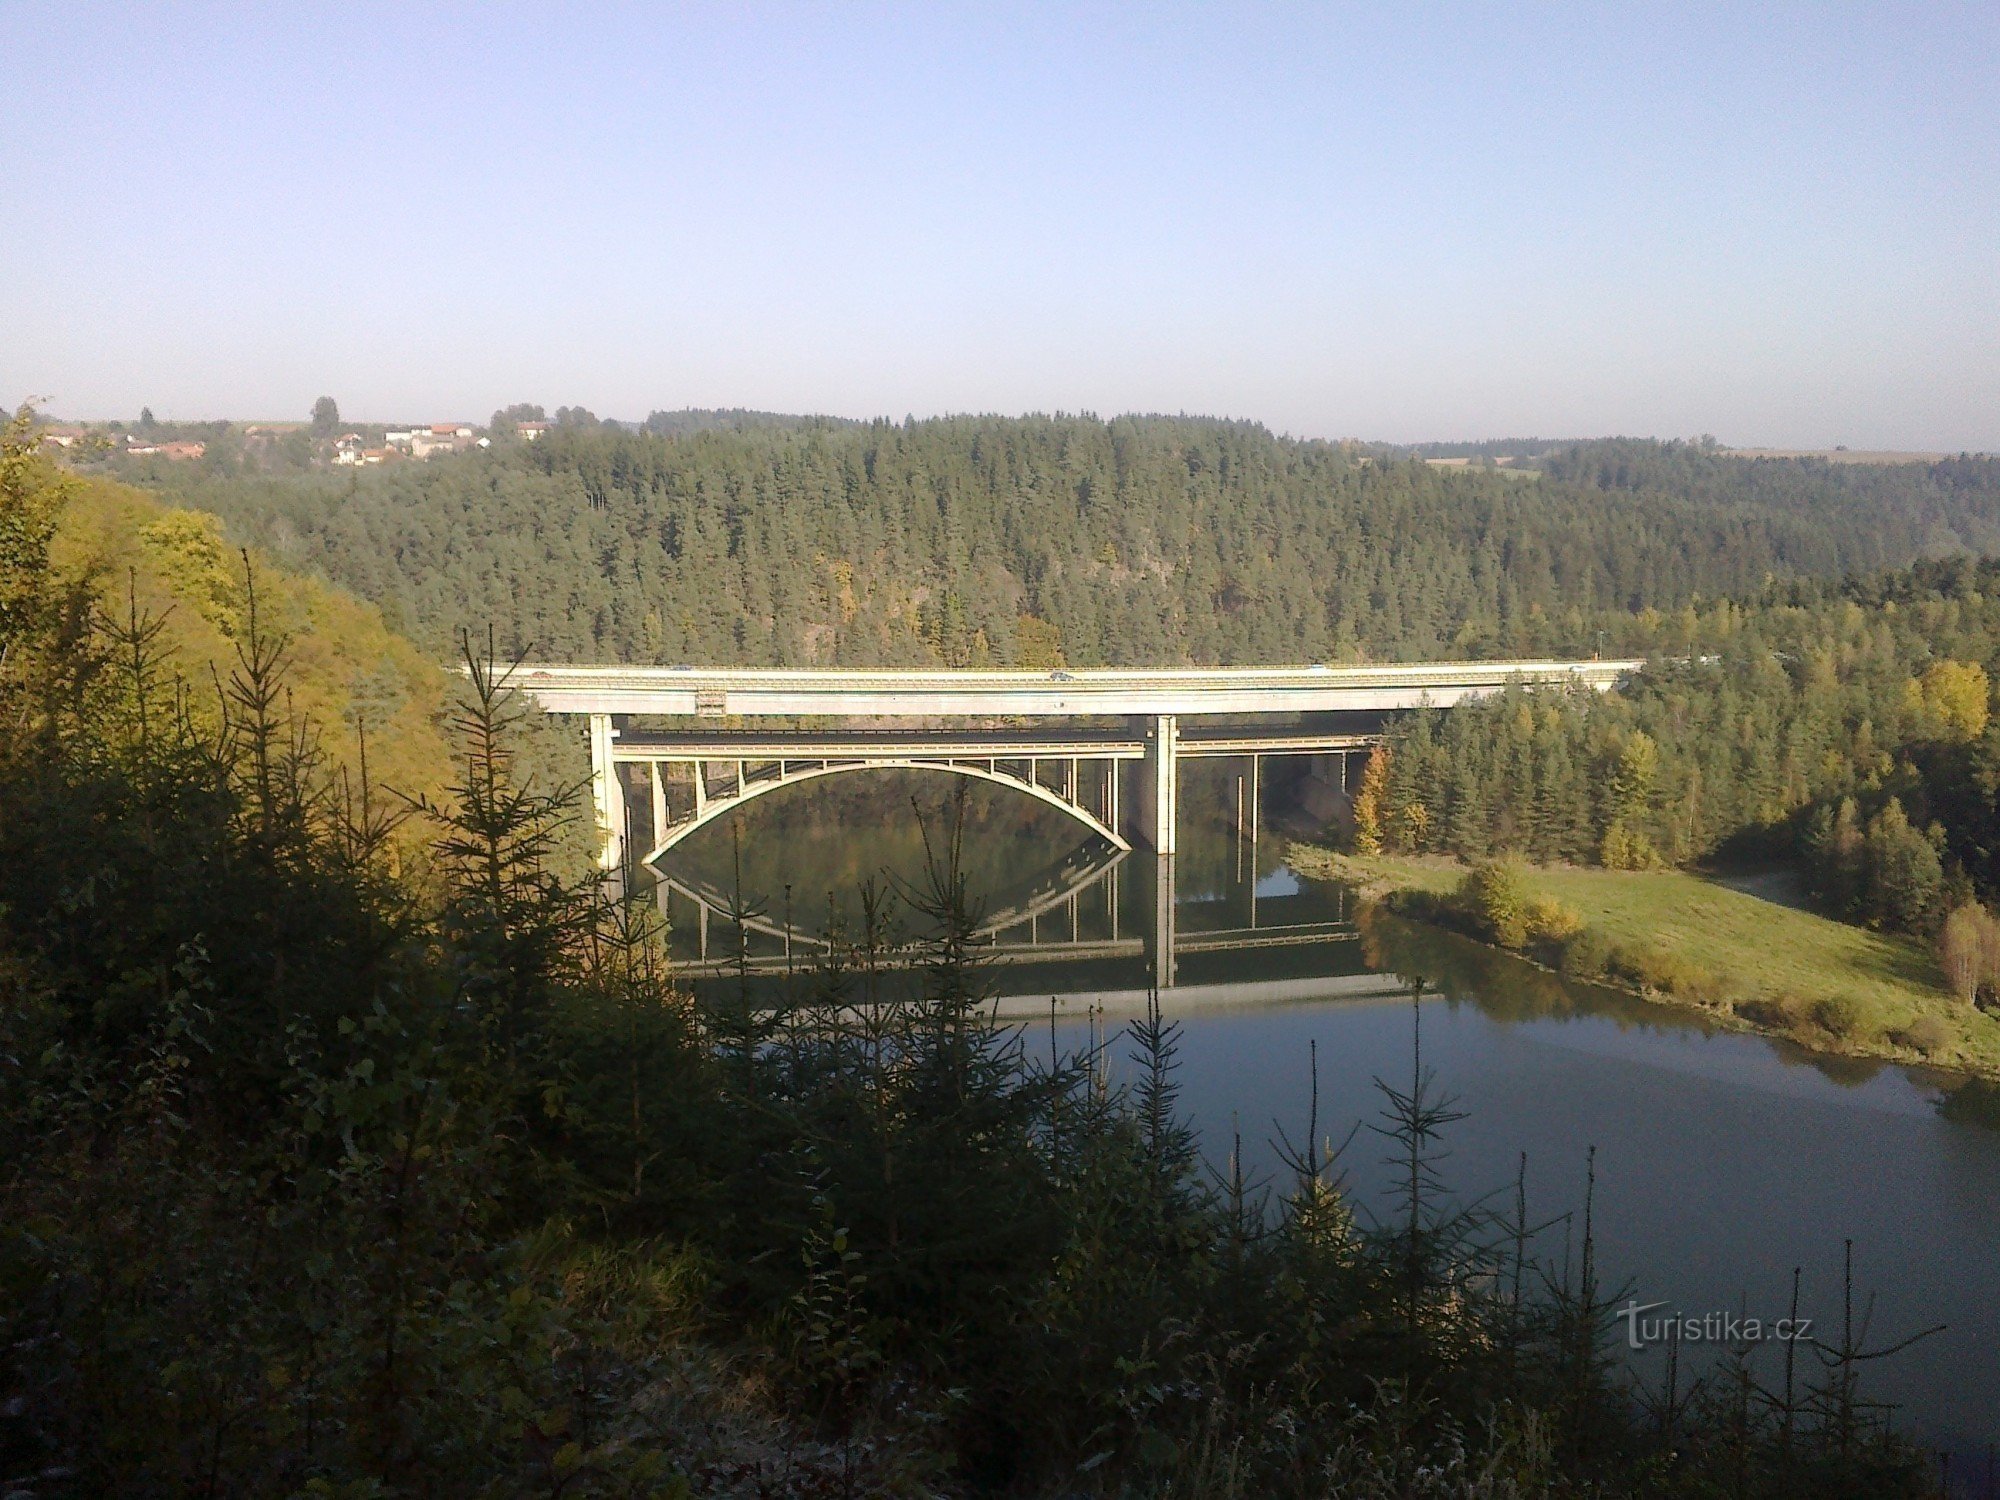 Double bridge near Píště.